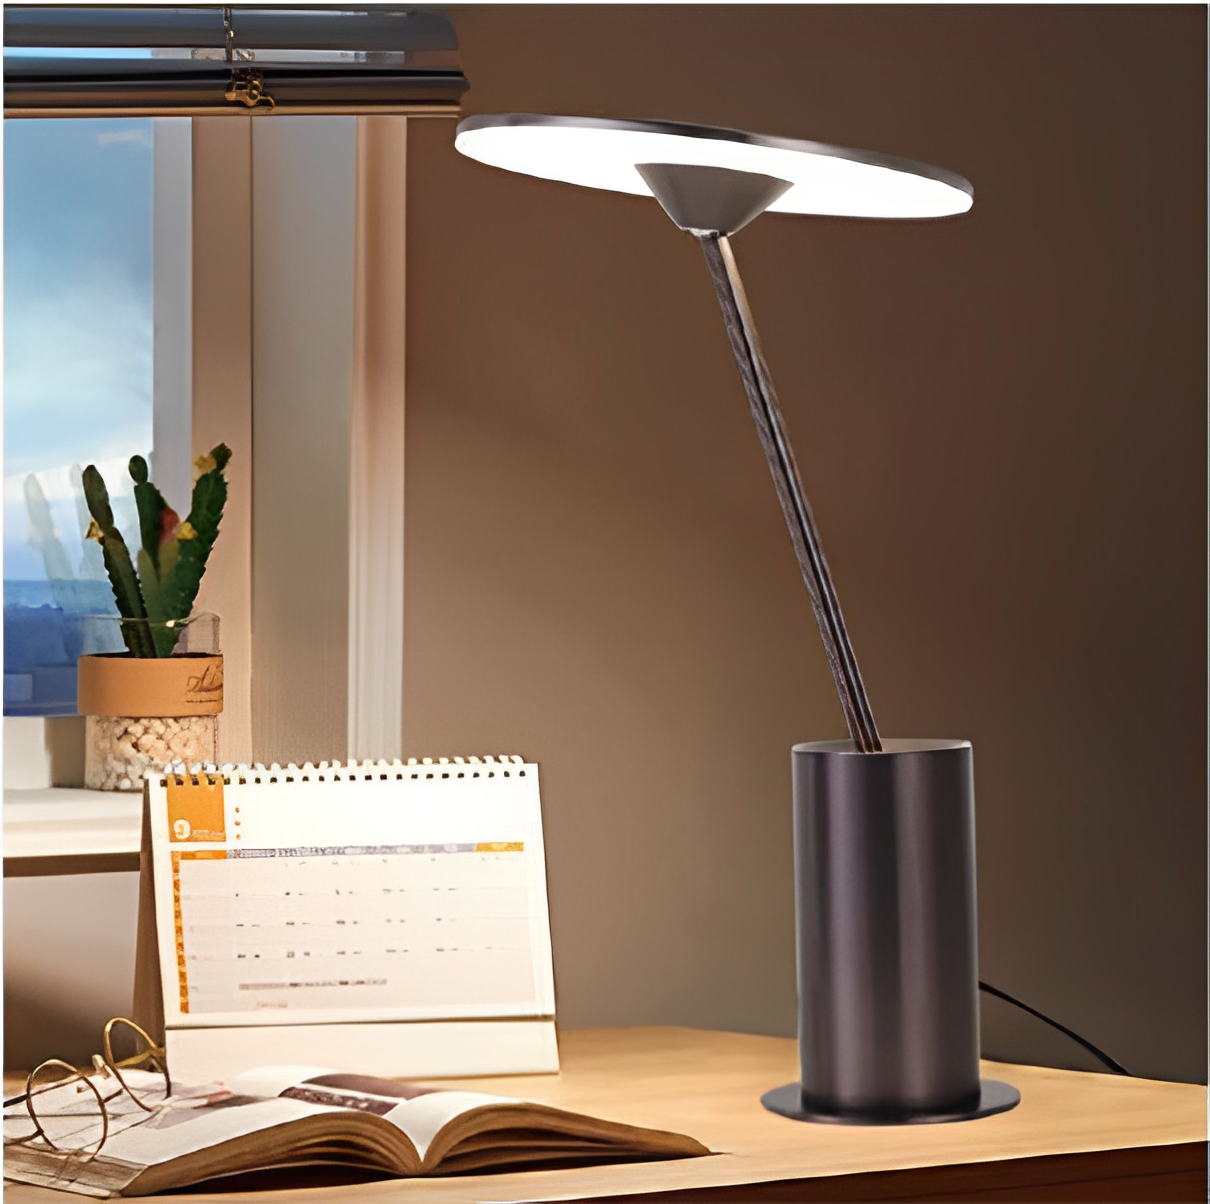 https://www.wonledlight.com/modern-creative-luxury-hotel-home-design-metal-base-bed-side-indoor-led-table-lamp-product/